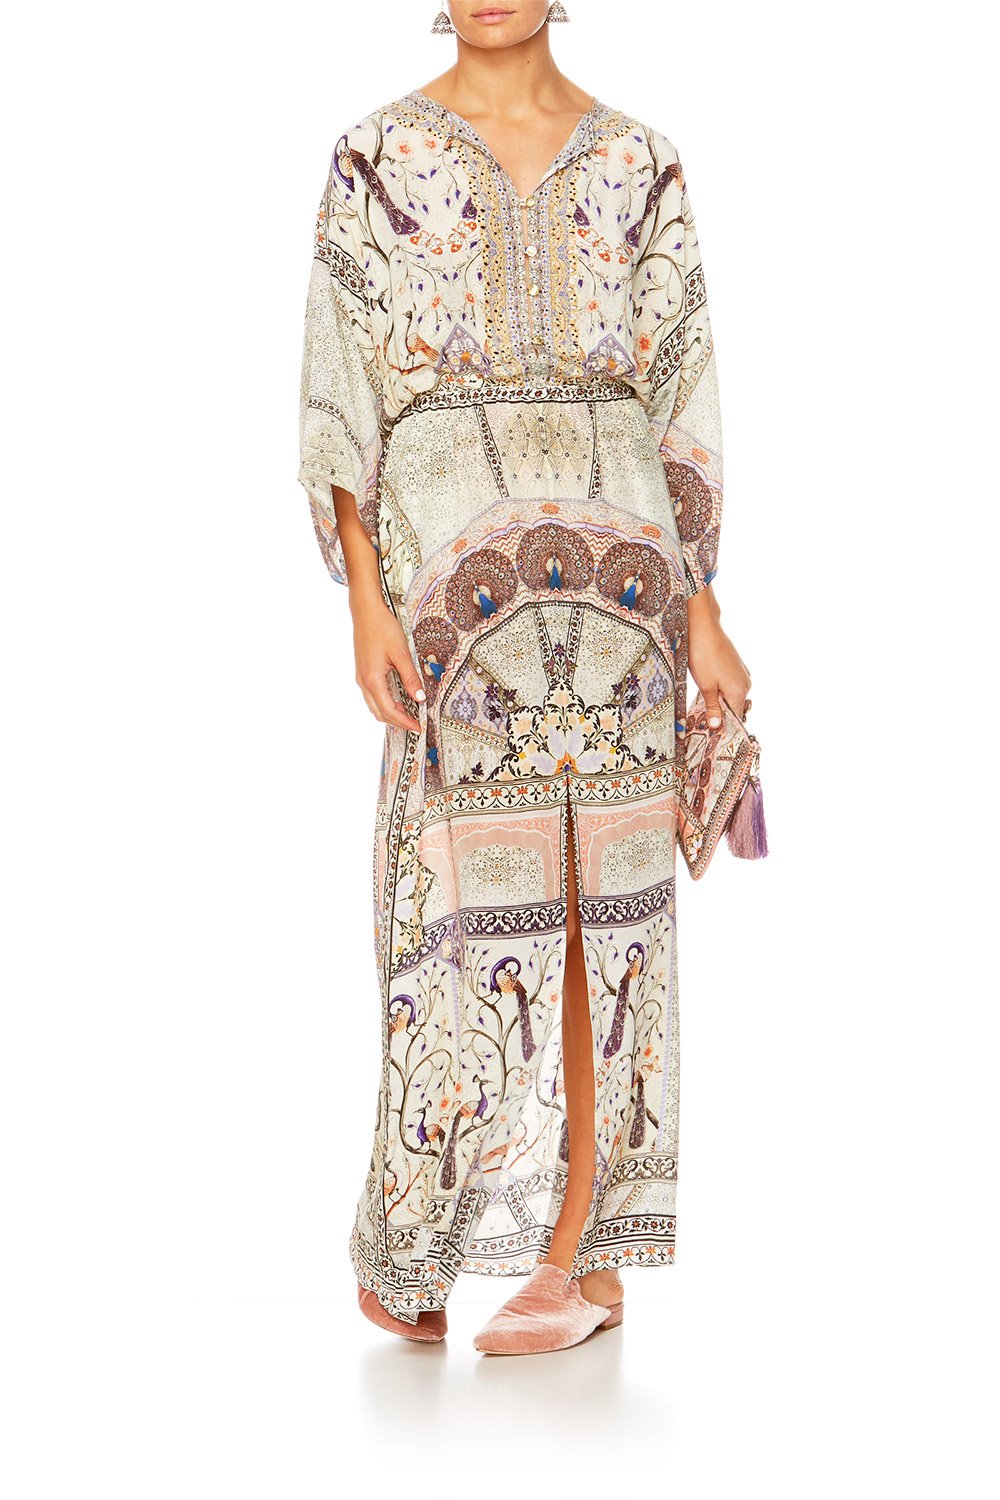 MAMA BAKSHI SPLIT POCKET DRESS